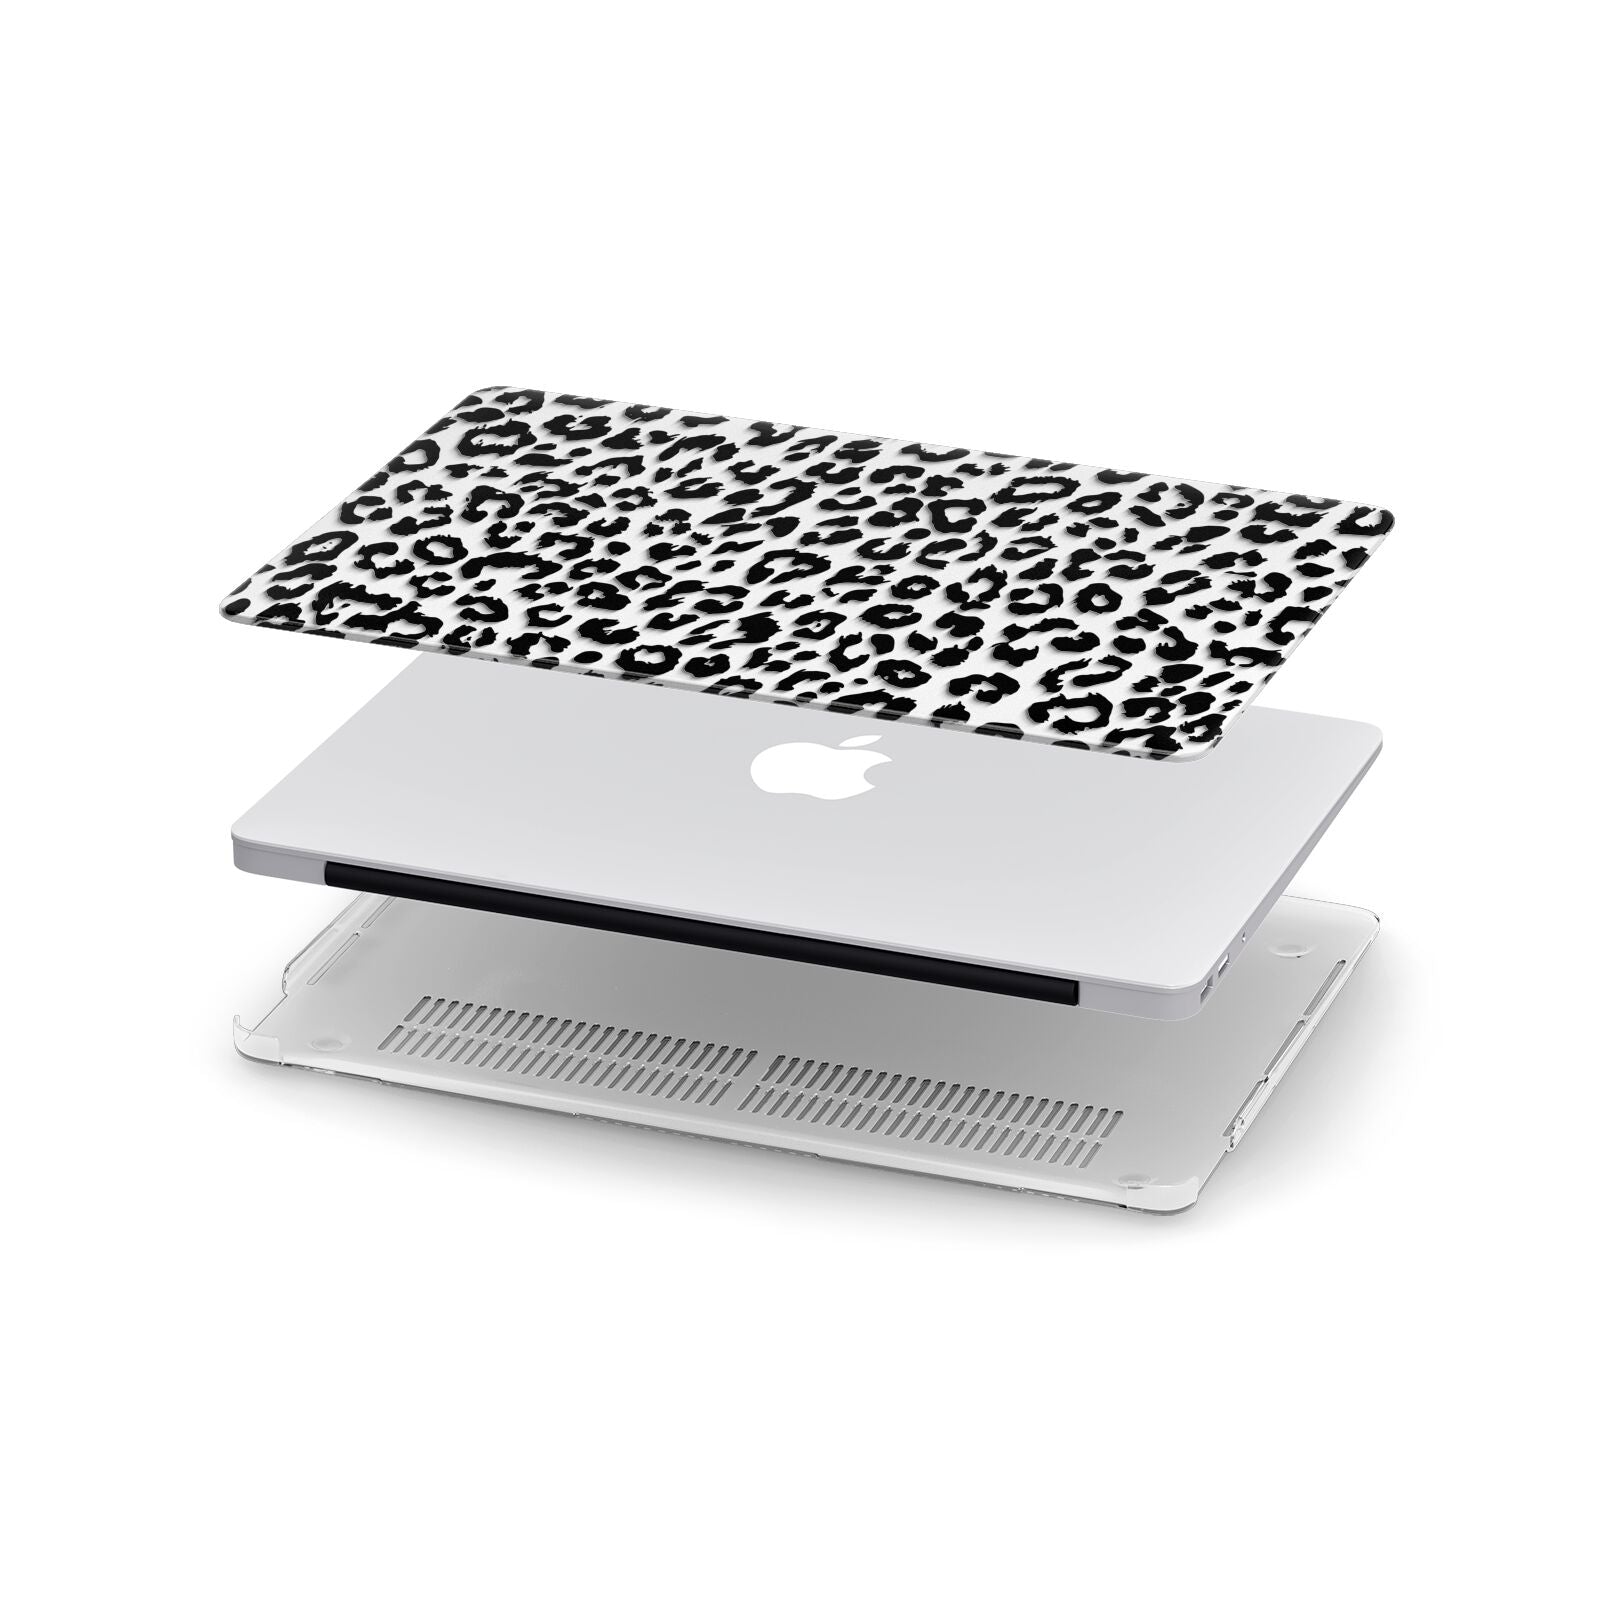 Black Leopard Print Apple MacBook Case in Detail